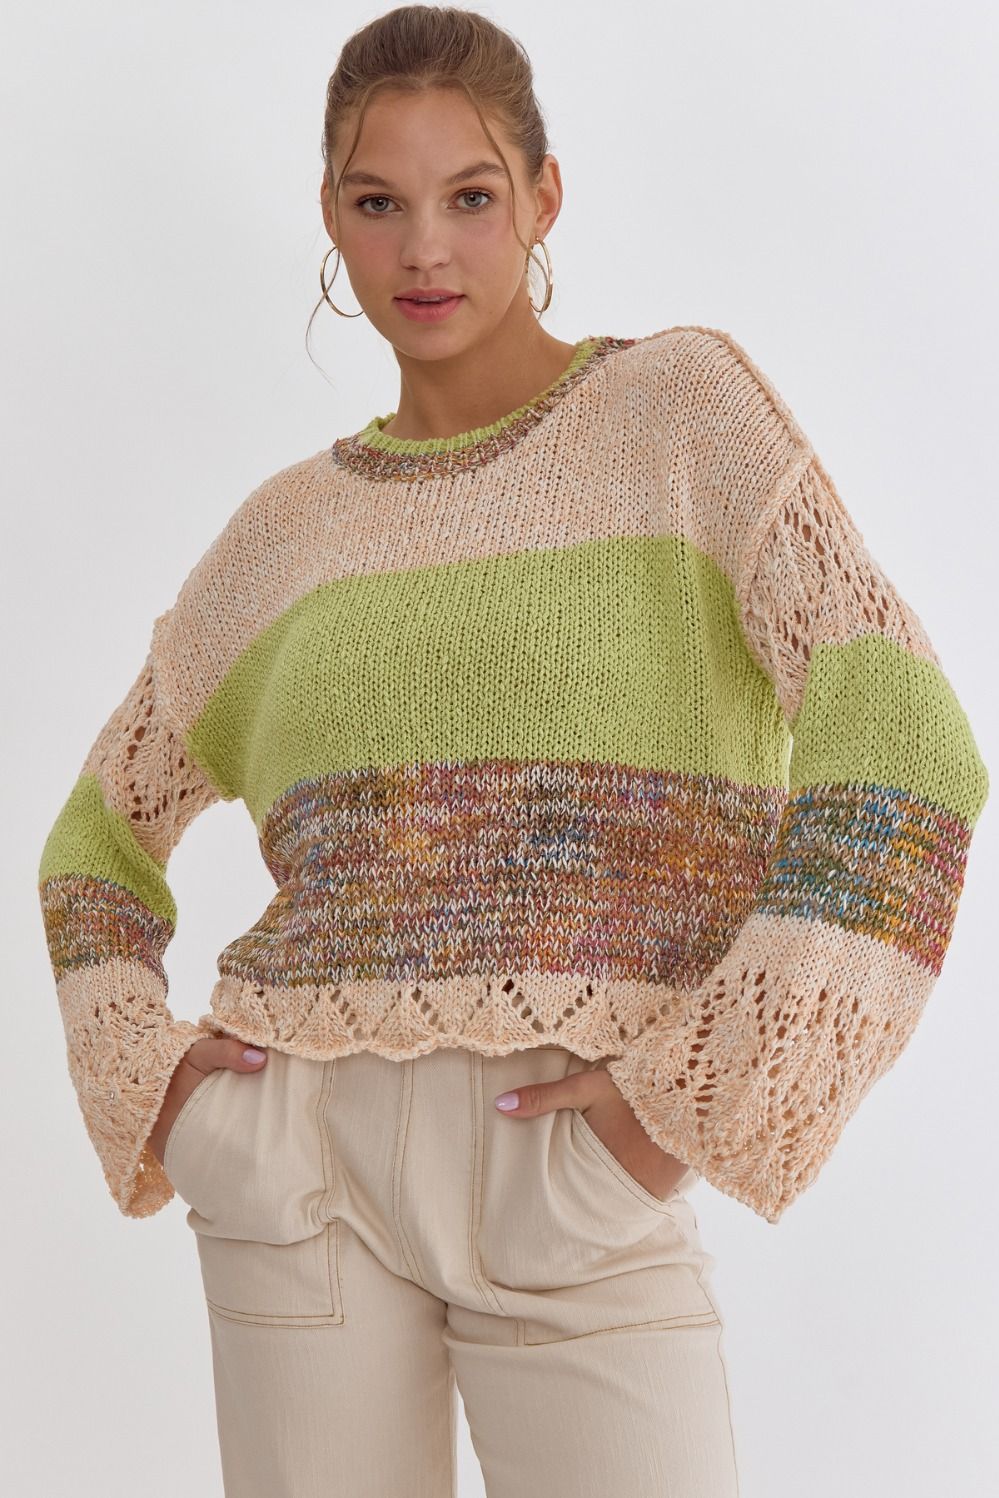 Zara Color Block Crocheted Sweater